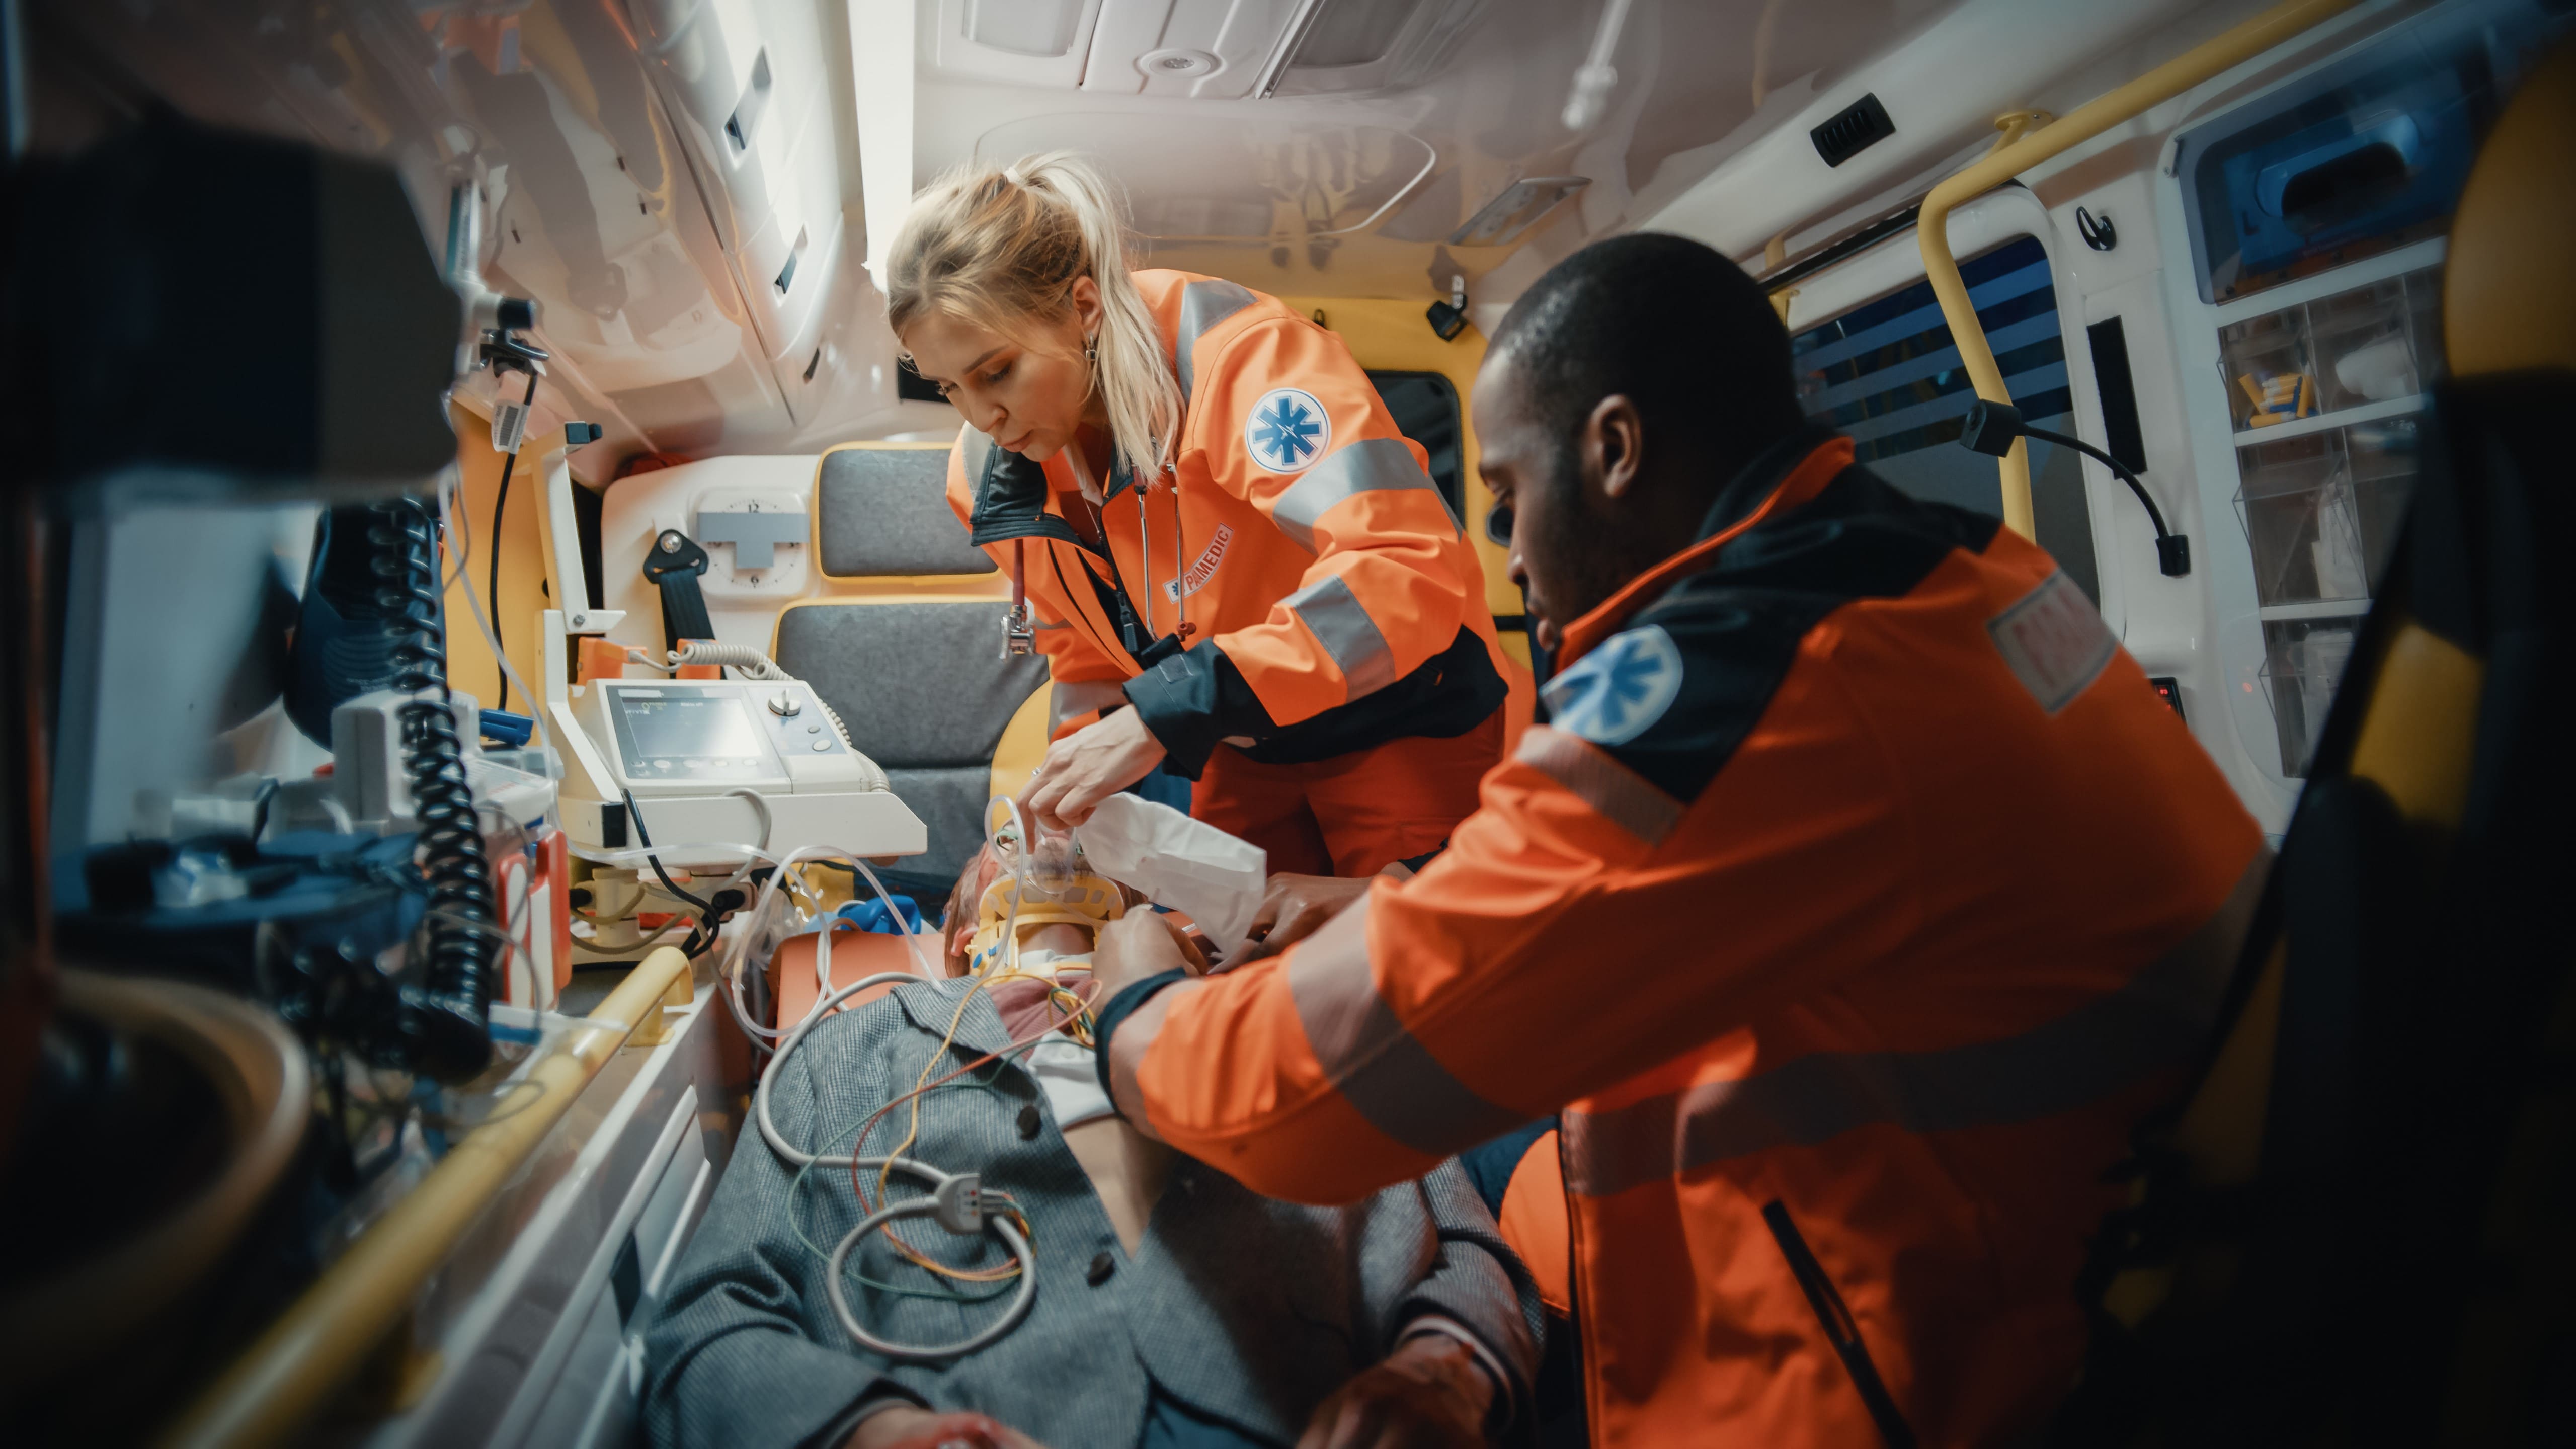 Paramedics at work in an ambulance